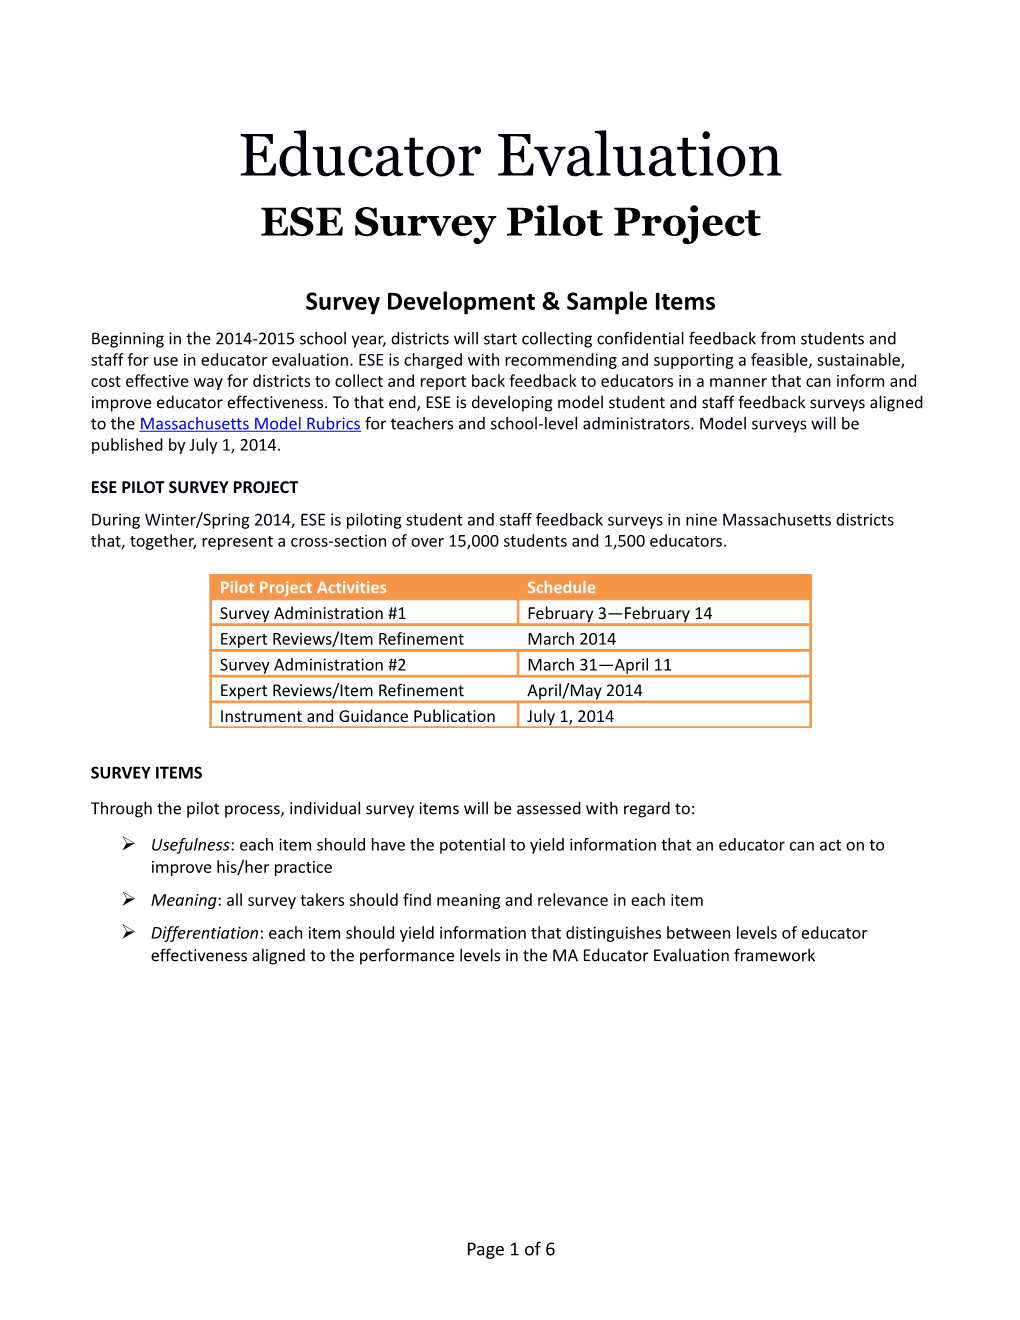 Ed Eval ESE Survey Pilot Sample Items